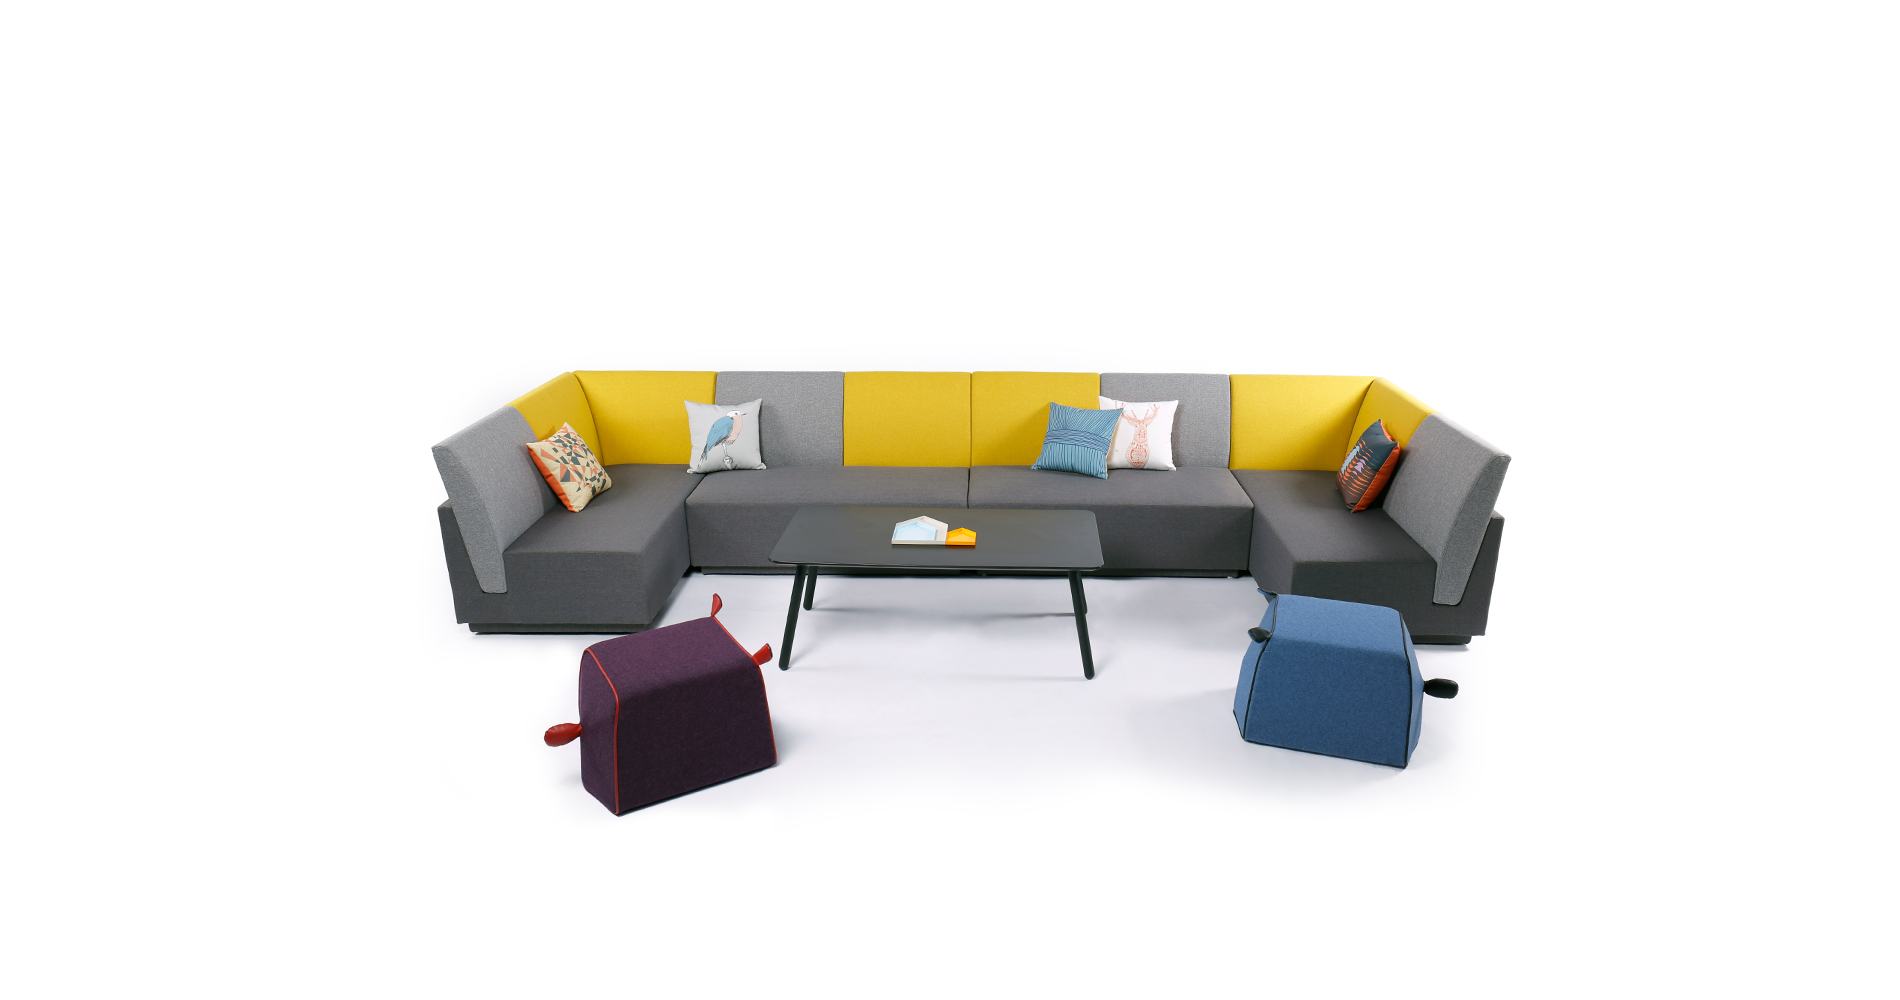 An image of Trough Sofa